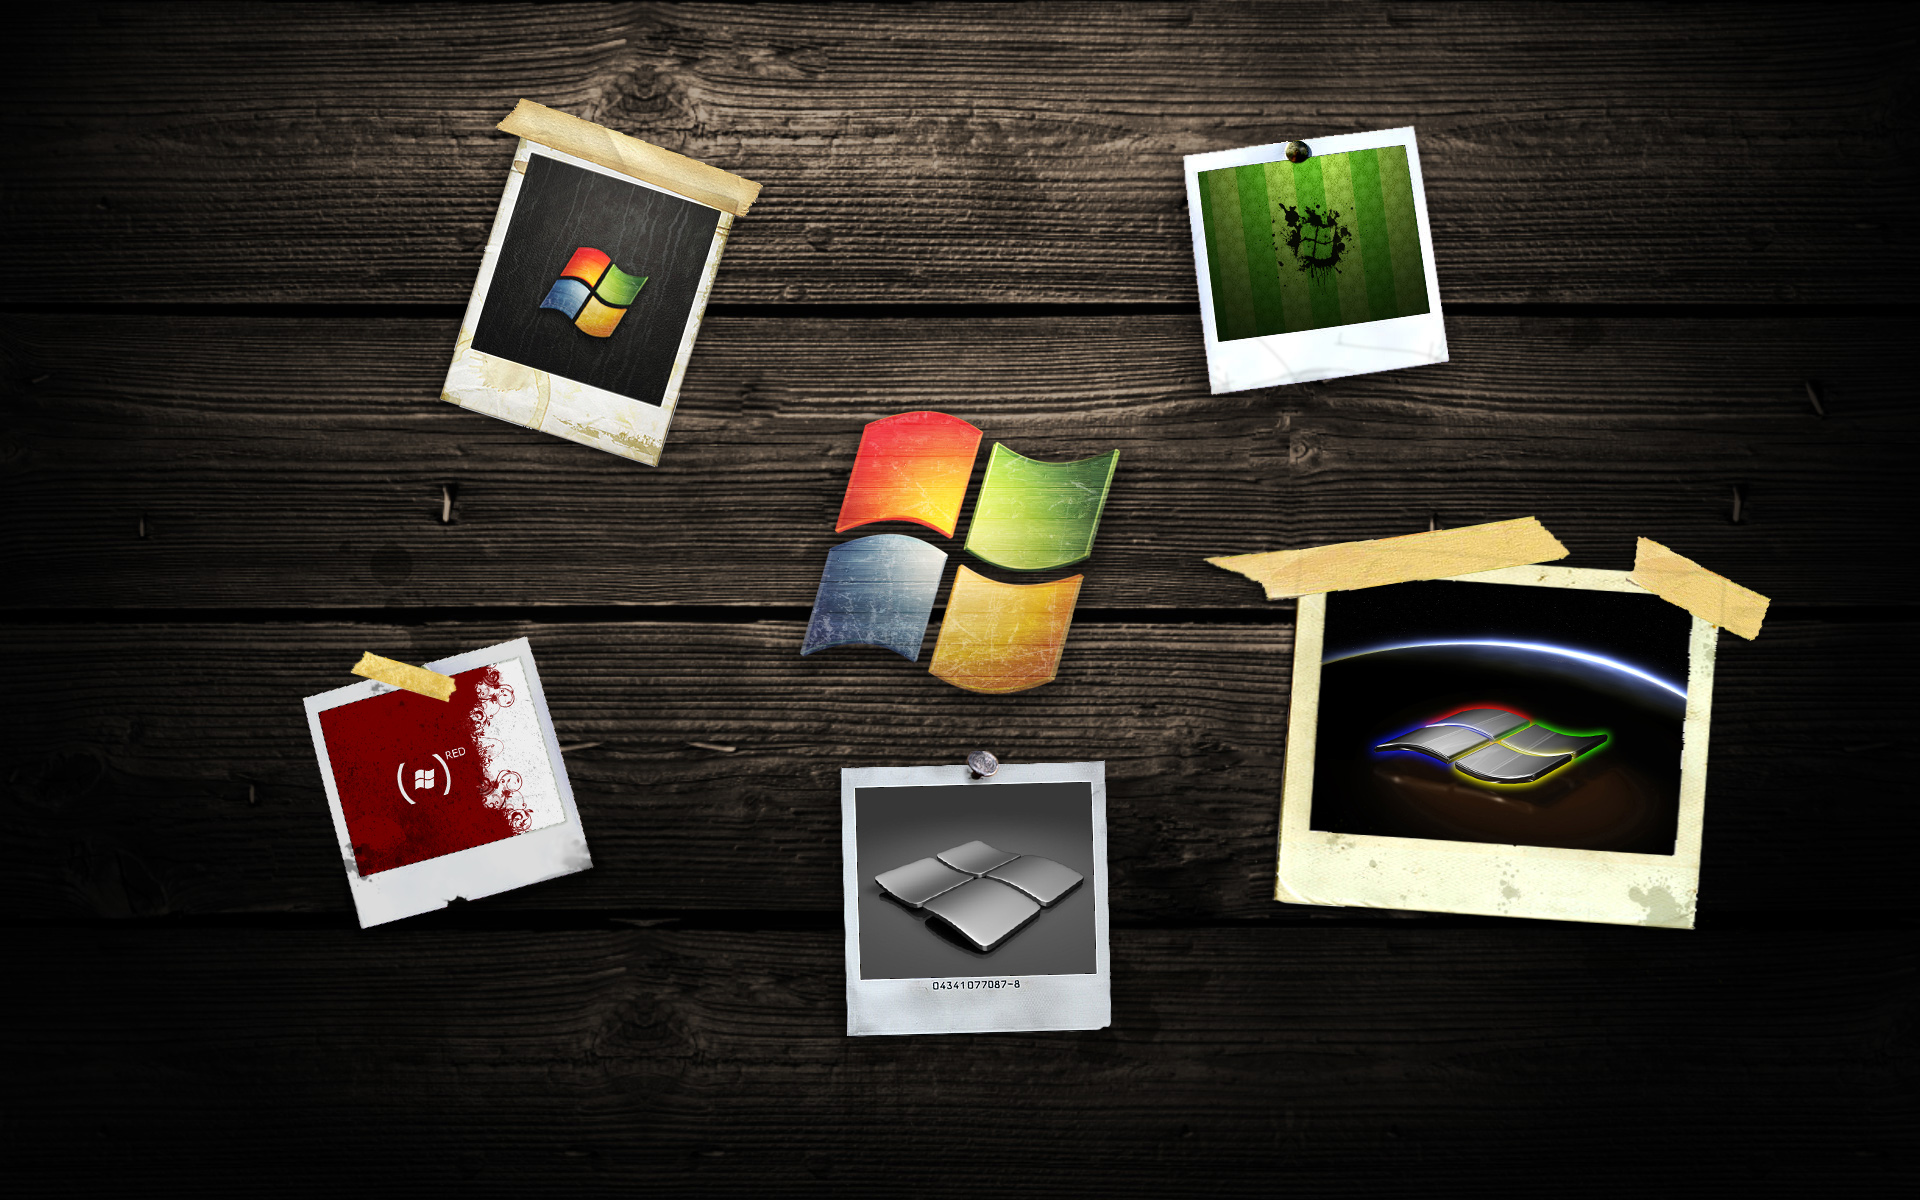 http://fc09.deviantart.net/fs46/f/2009/178/4/b/Windows_Wallpaper_Collage_by_dberm22.jpg